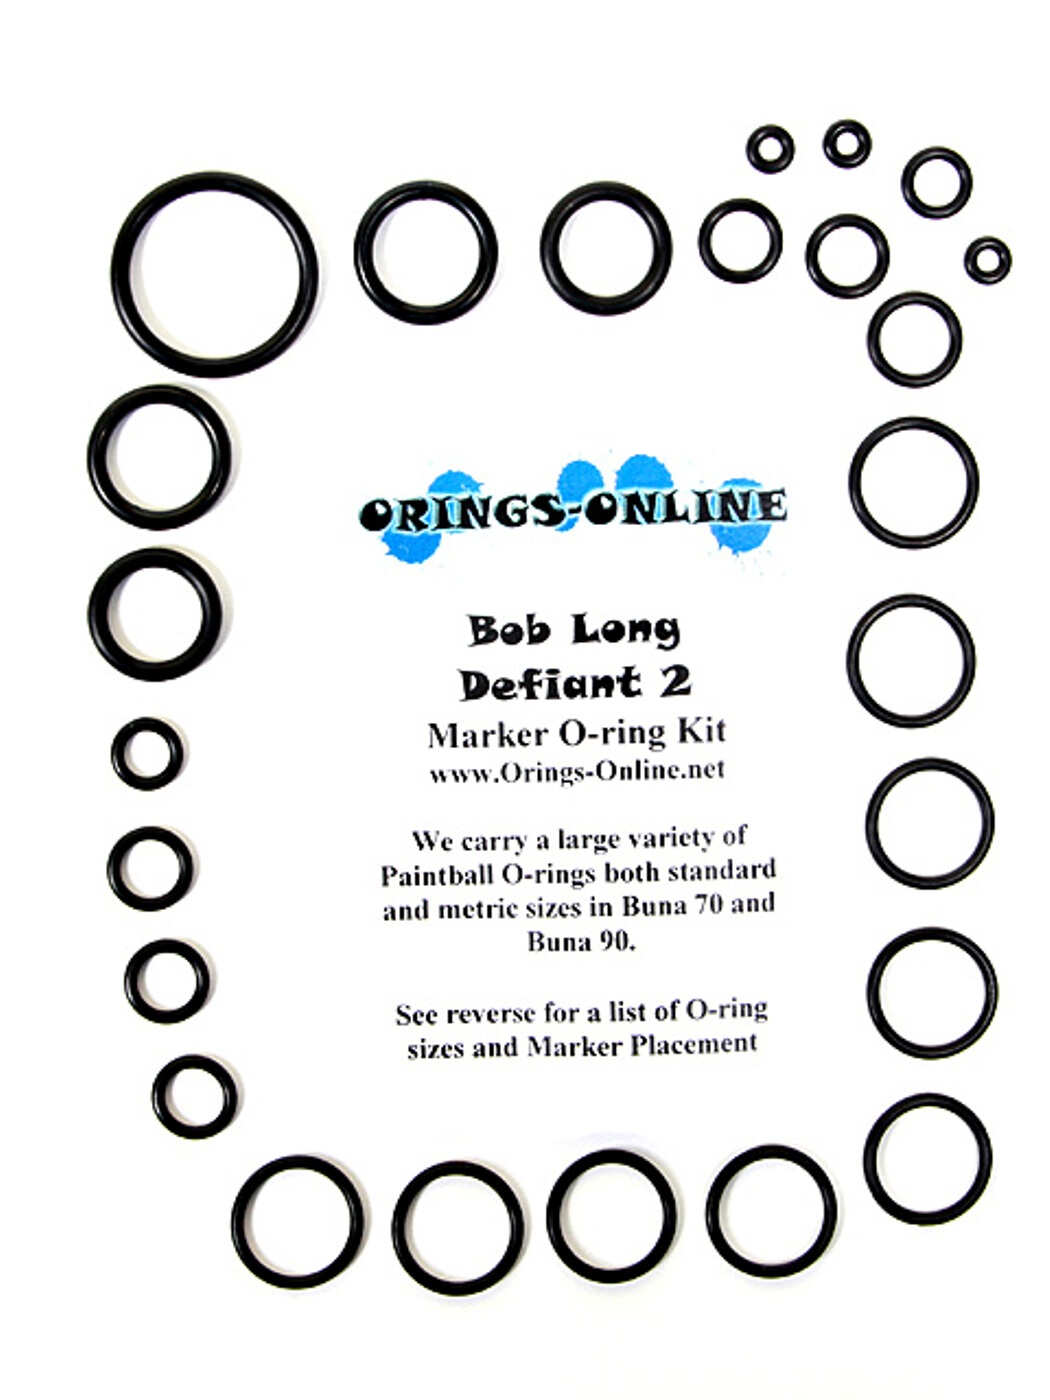 Bob Long Defiant 2 Marker O-ring Kit